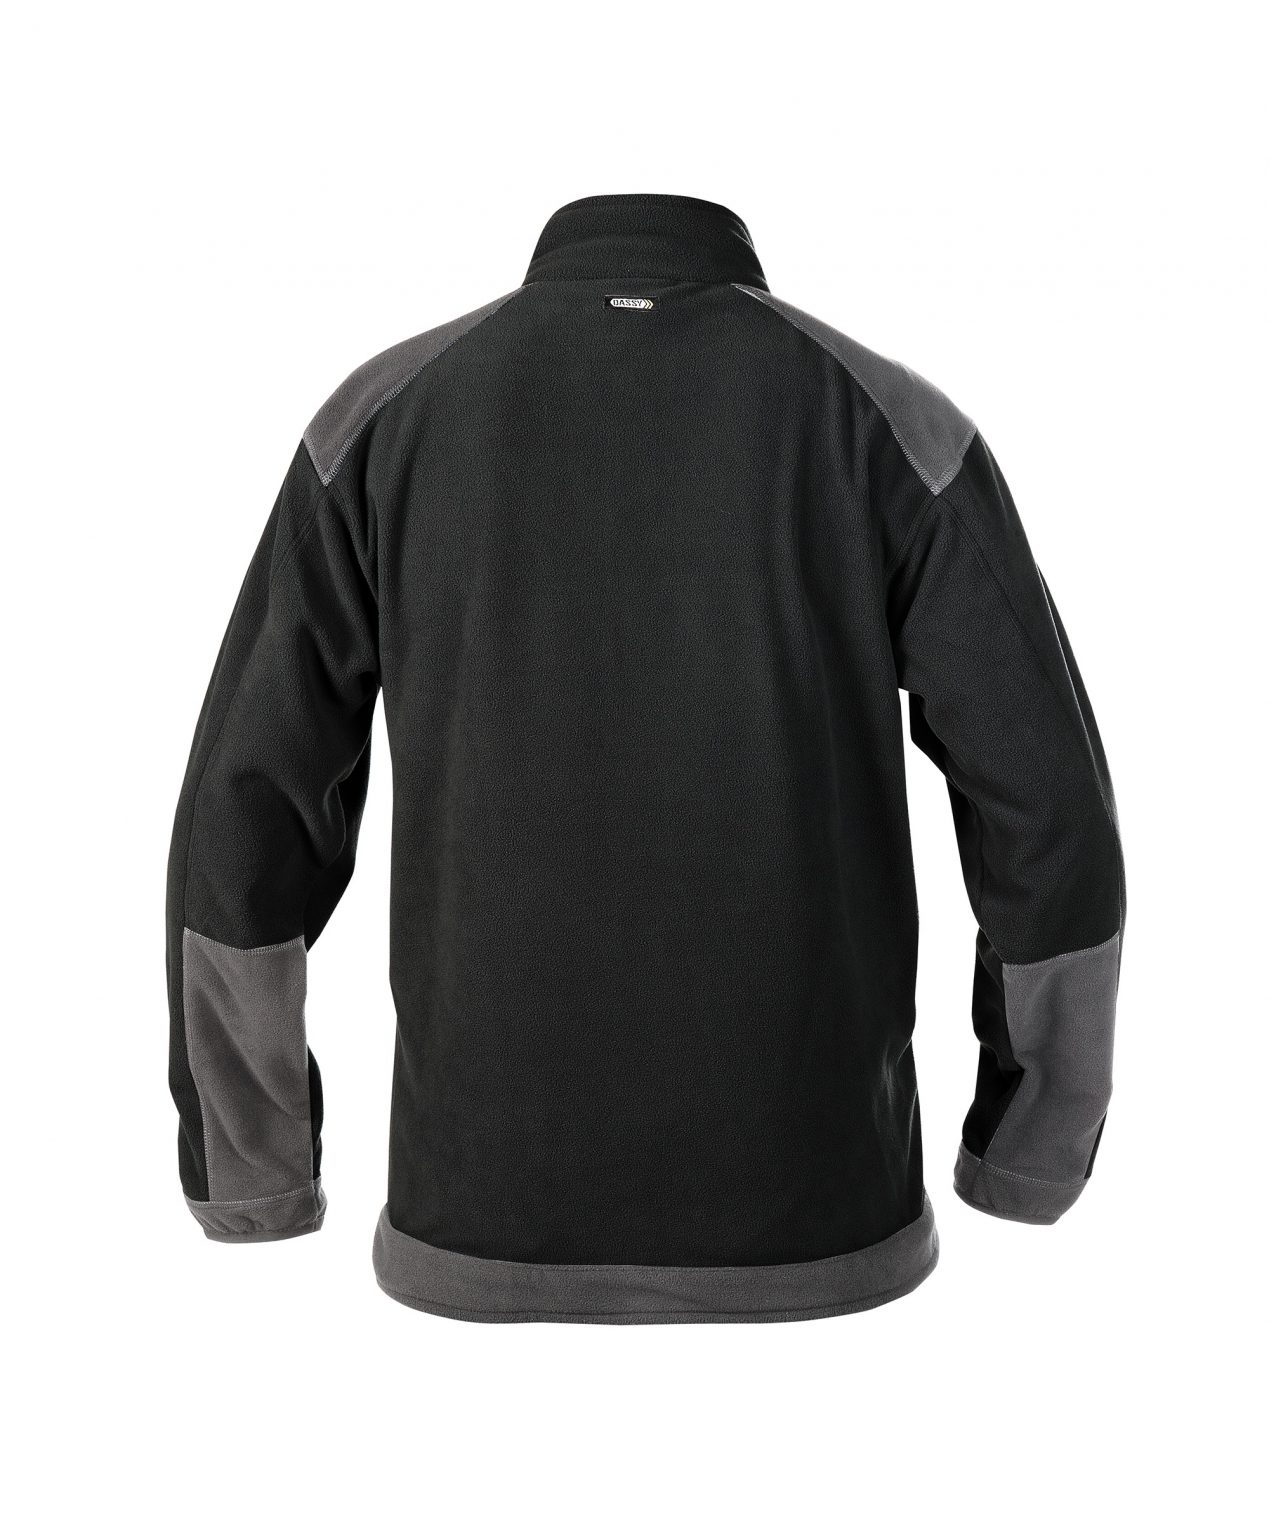 kazan two tone fleece jacket black cement grey back